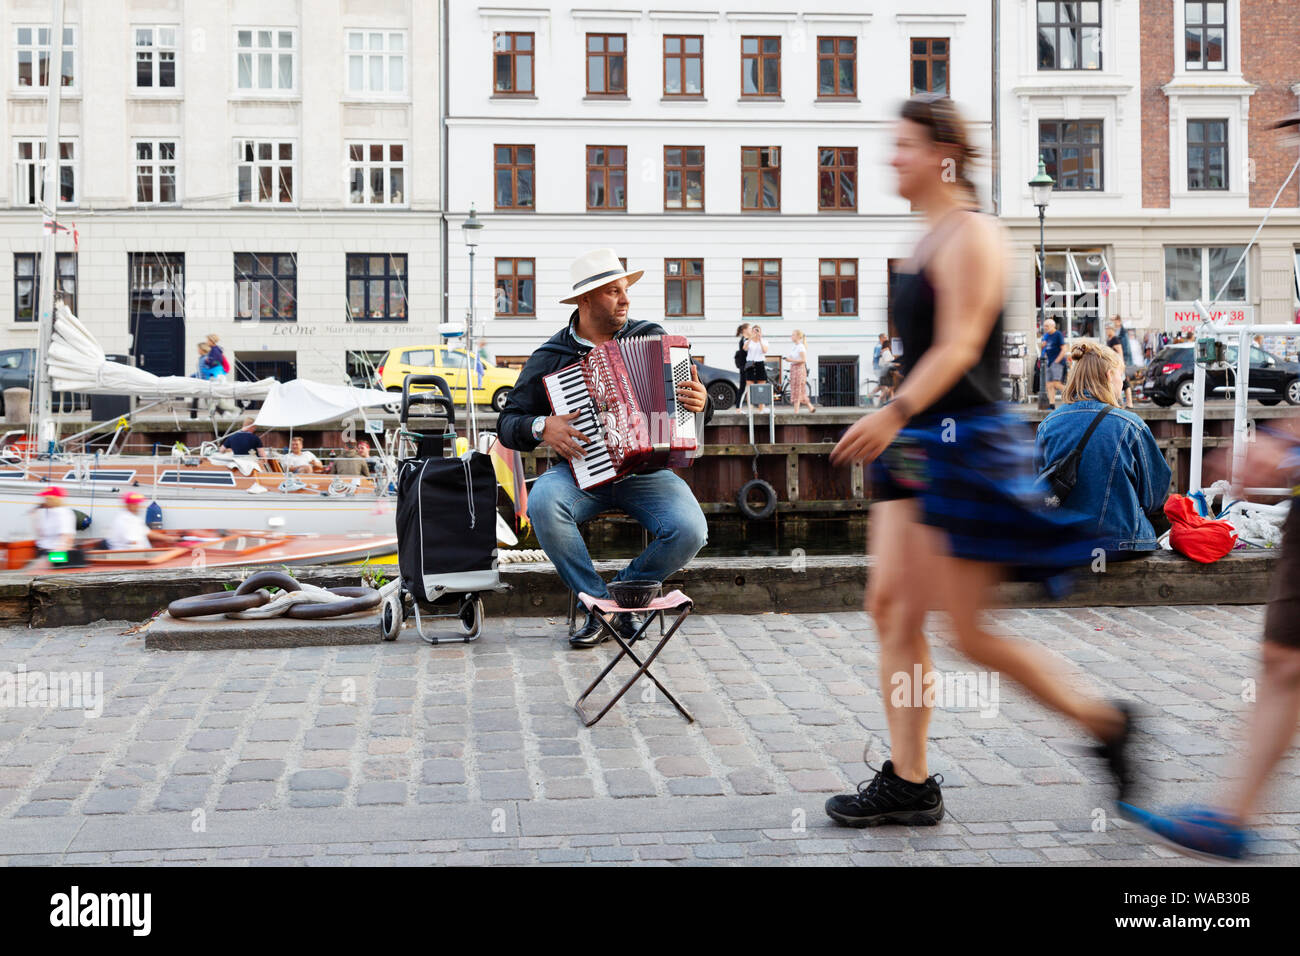 Copenhagen busker - a street musician playing an accordion, Nyhavn, Copenhagen, Denmark, Scandinavia Europe Stock Photo